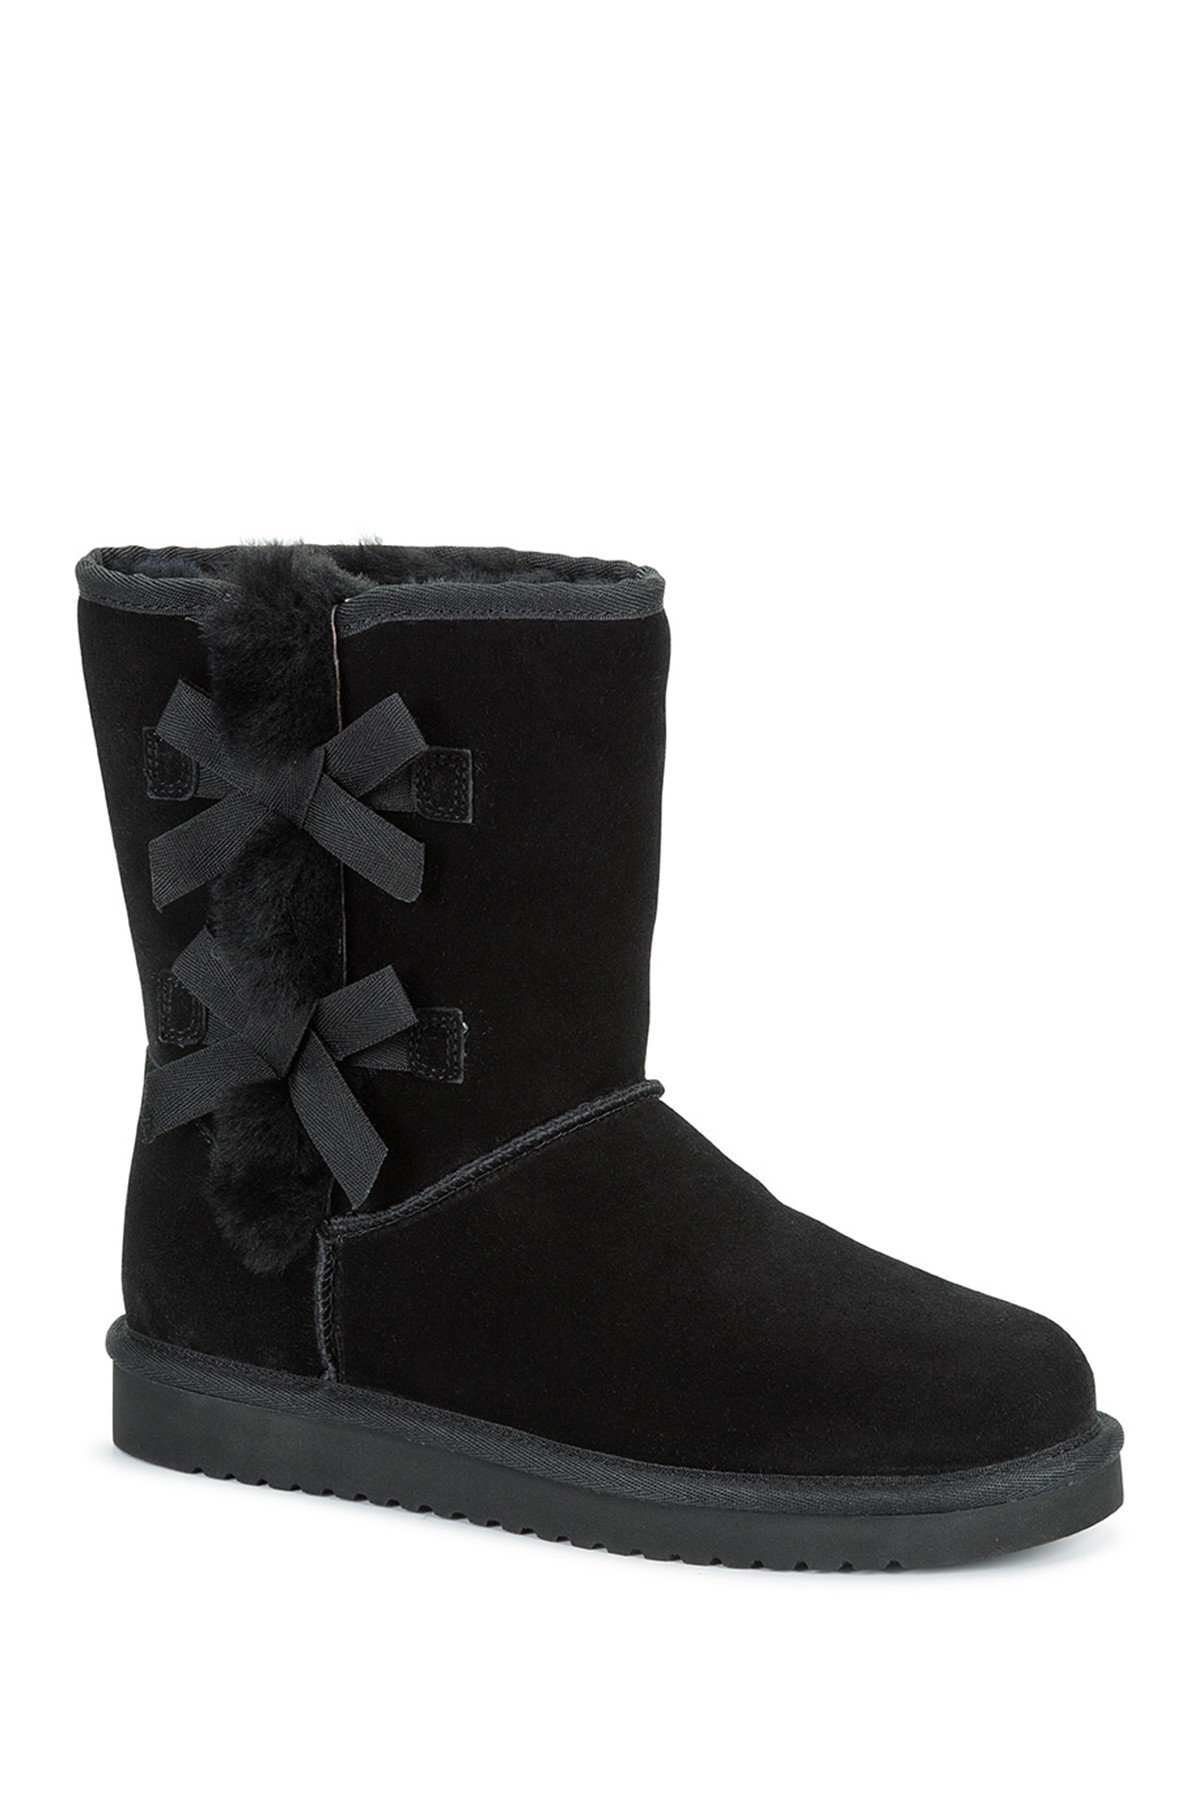 women winter boots koolaburra by ugg - victoria short genuine sheepskin u0026 faux fur boot ulacmga